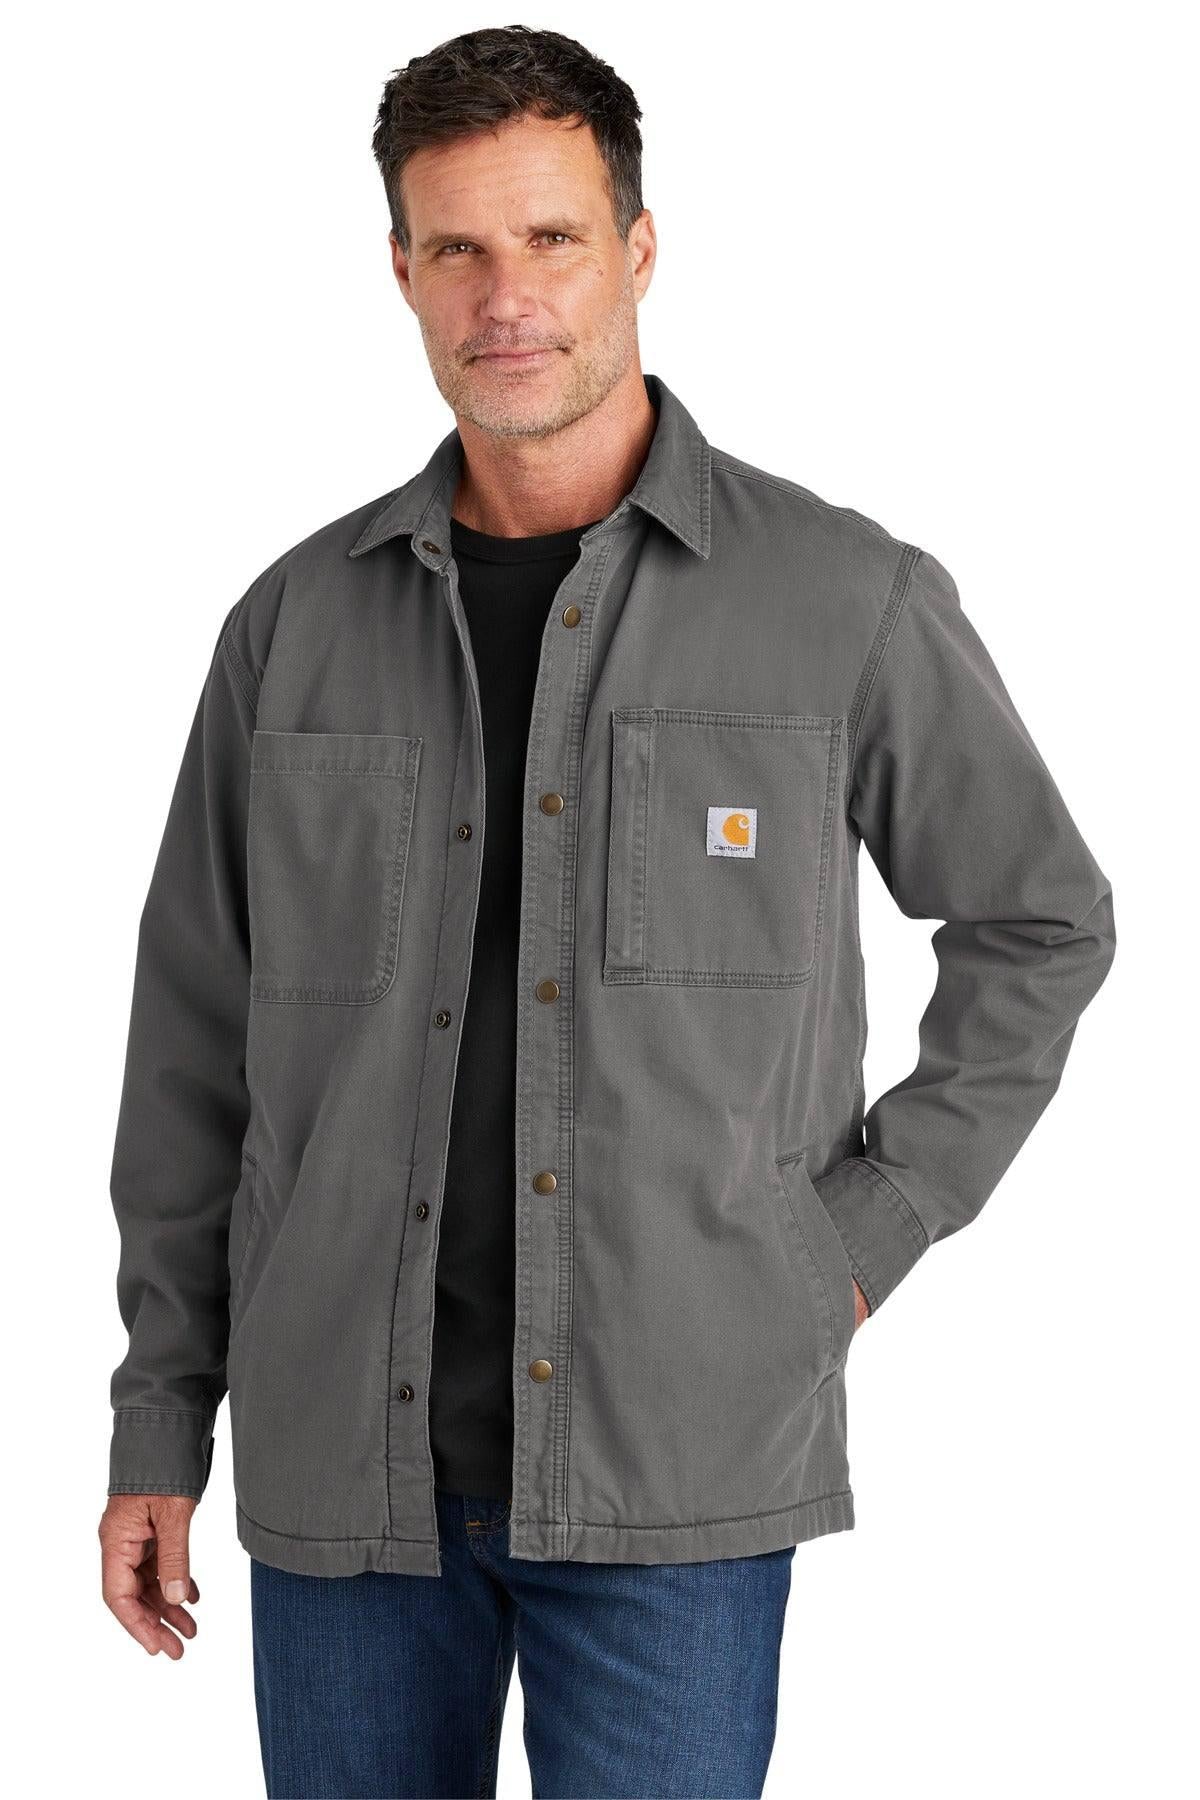 Bror transportabel komprimeret Design Custom Carhartt Rugged Flex Fleece-Lined Shirt Jacket CT105532 |  Kodiak Wholesale